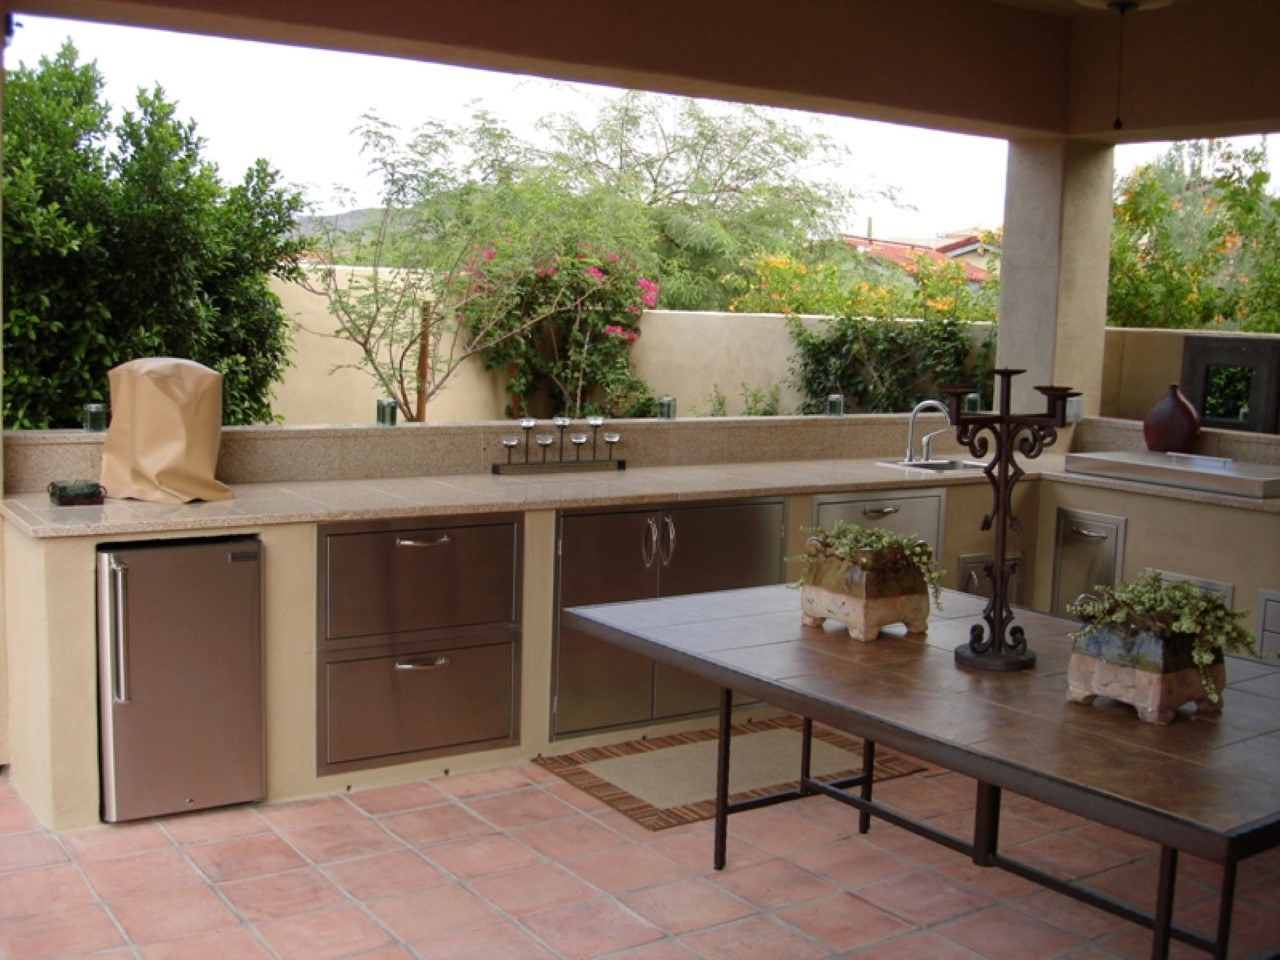 Outdoor Kitchen Patio Designs
 Small Outdoor Kitchen Design Ideas Nurani Org Inexpensive